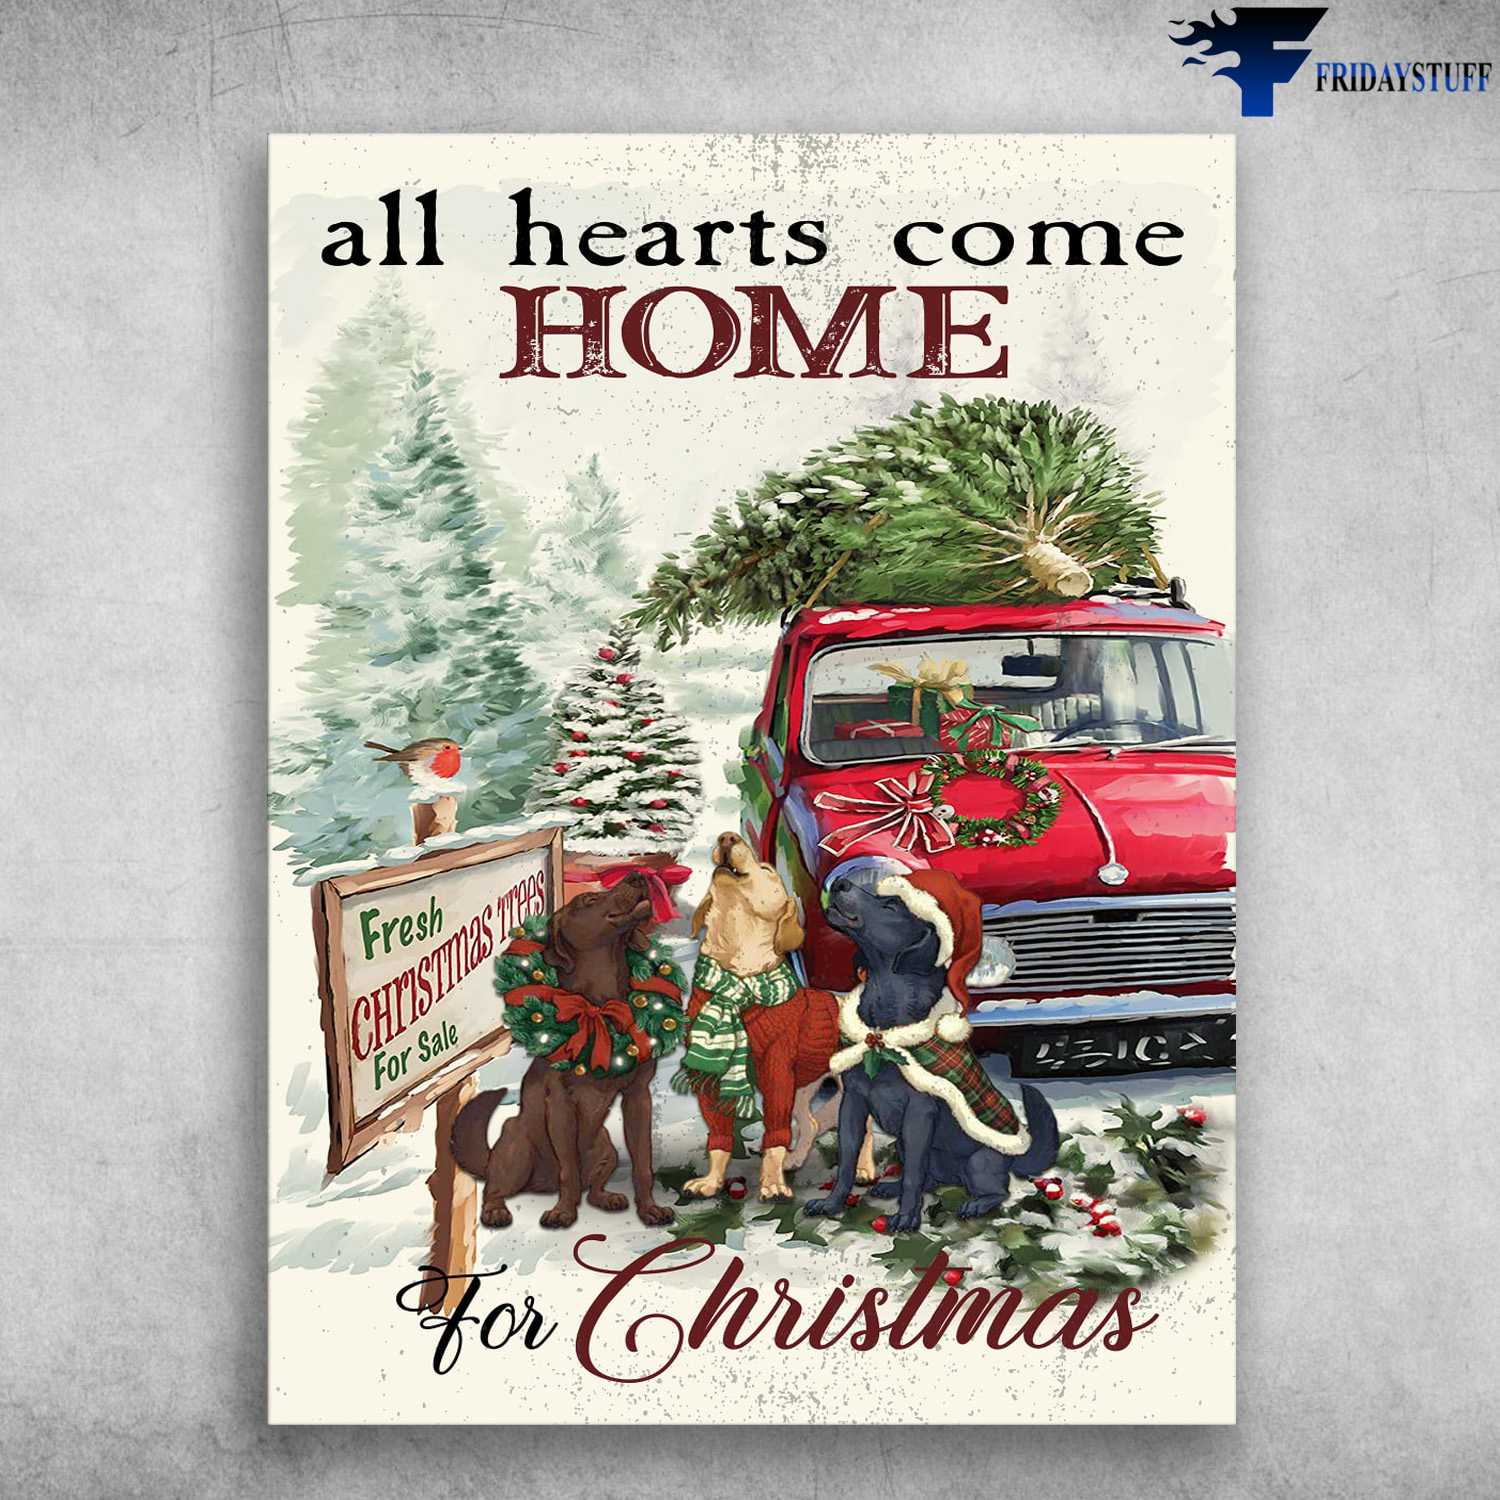 Labrador Dog, Christmas Poster - All Hearts Come Home, For Christmas, Fresh Christmas Trees For Sale